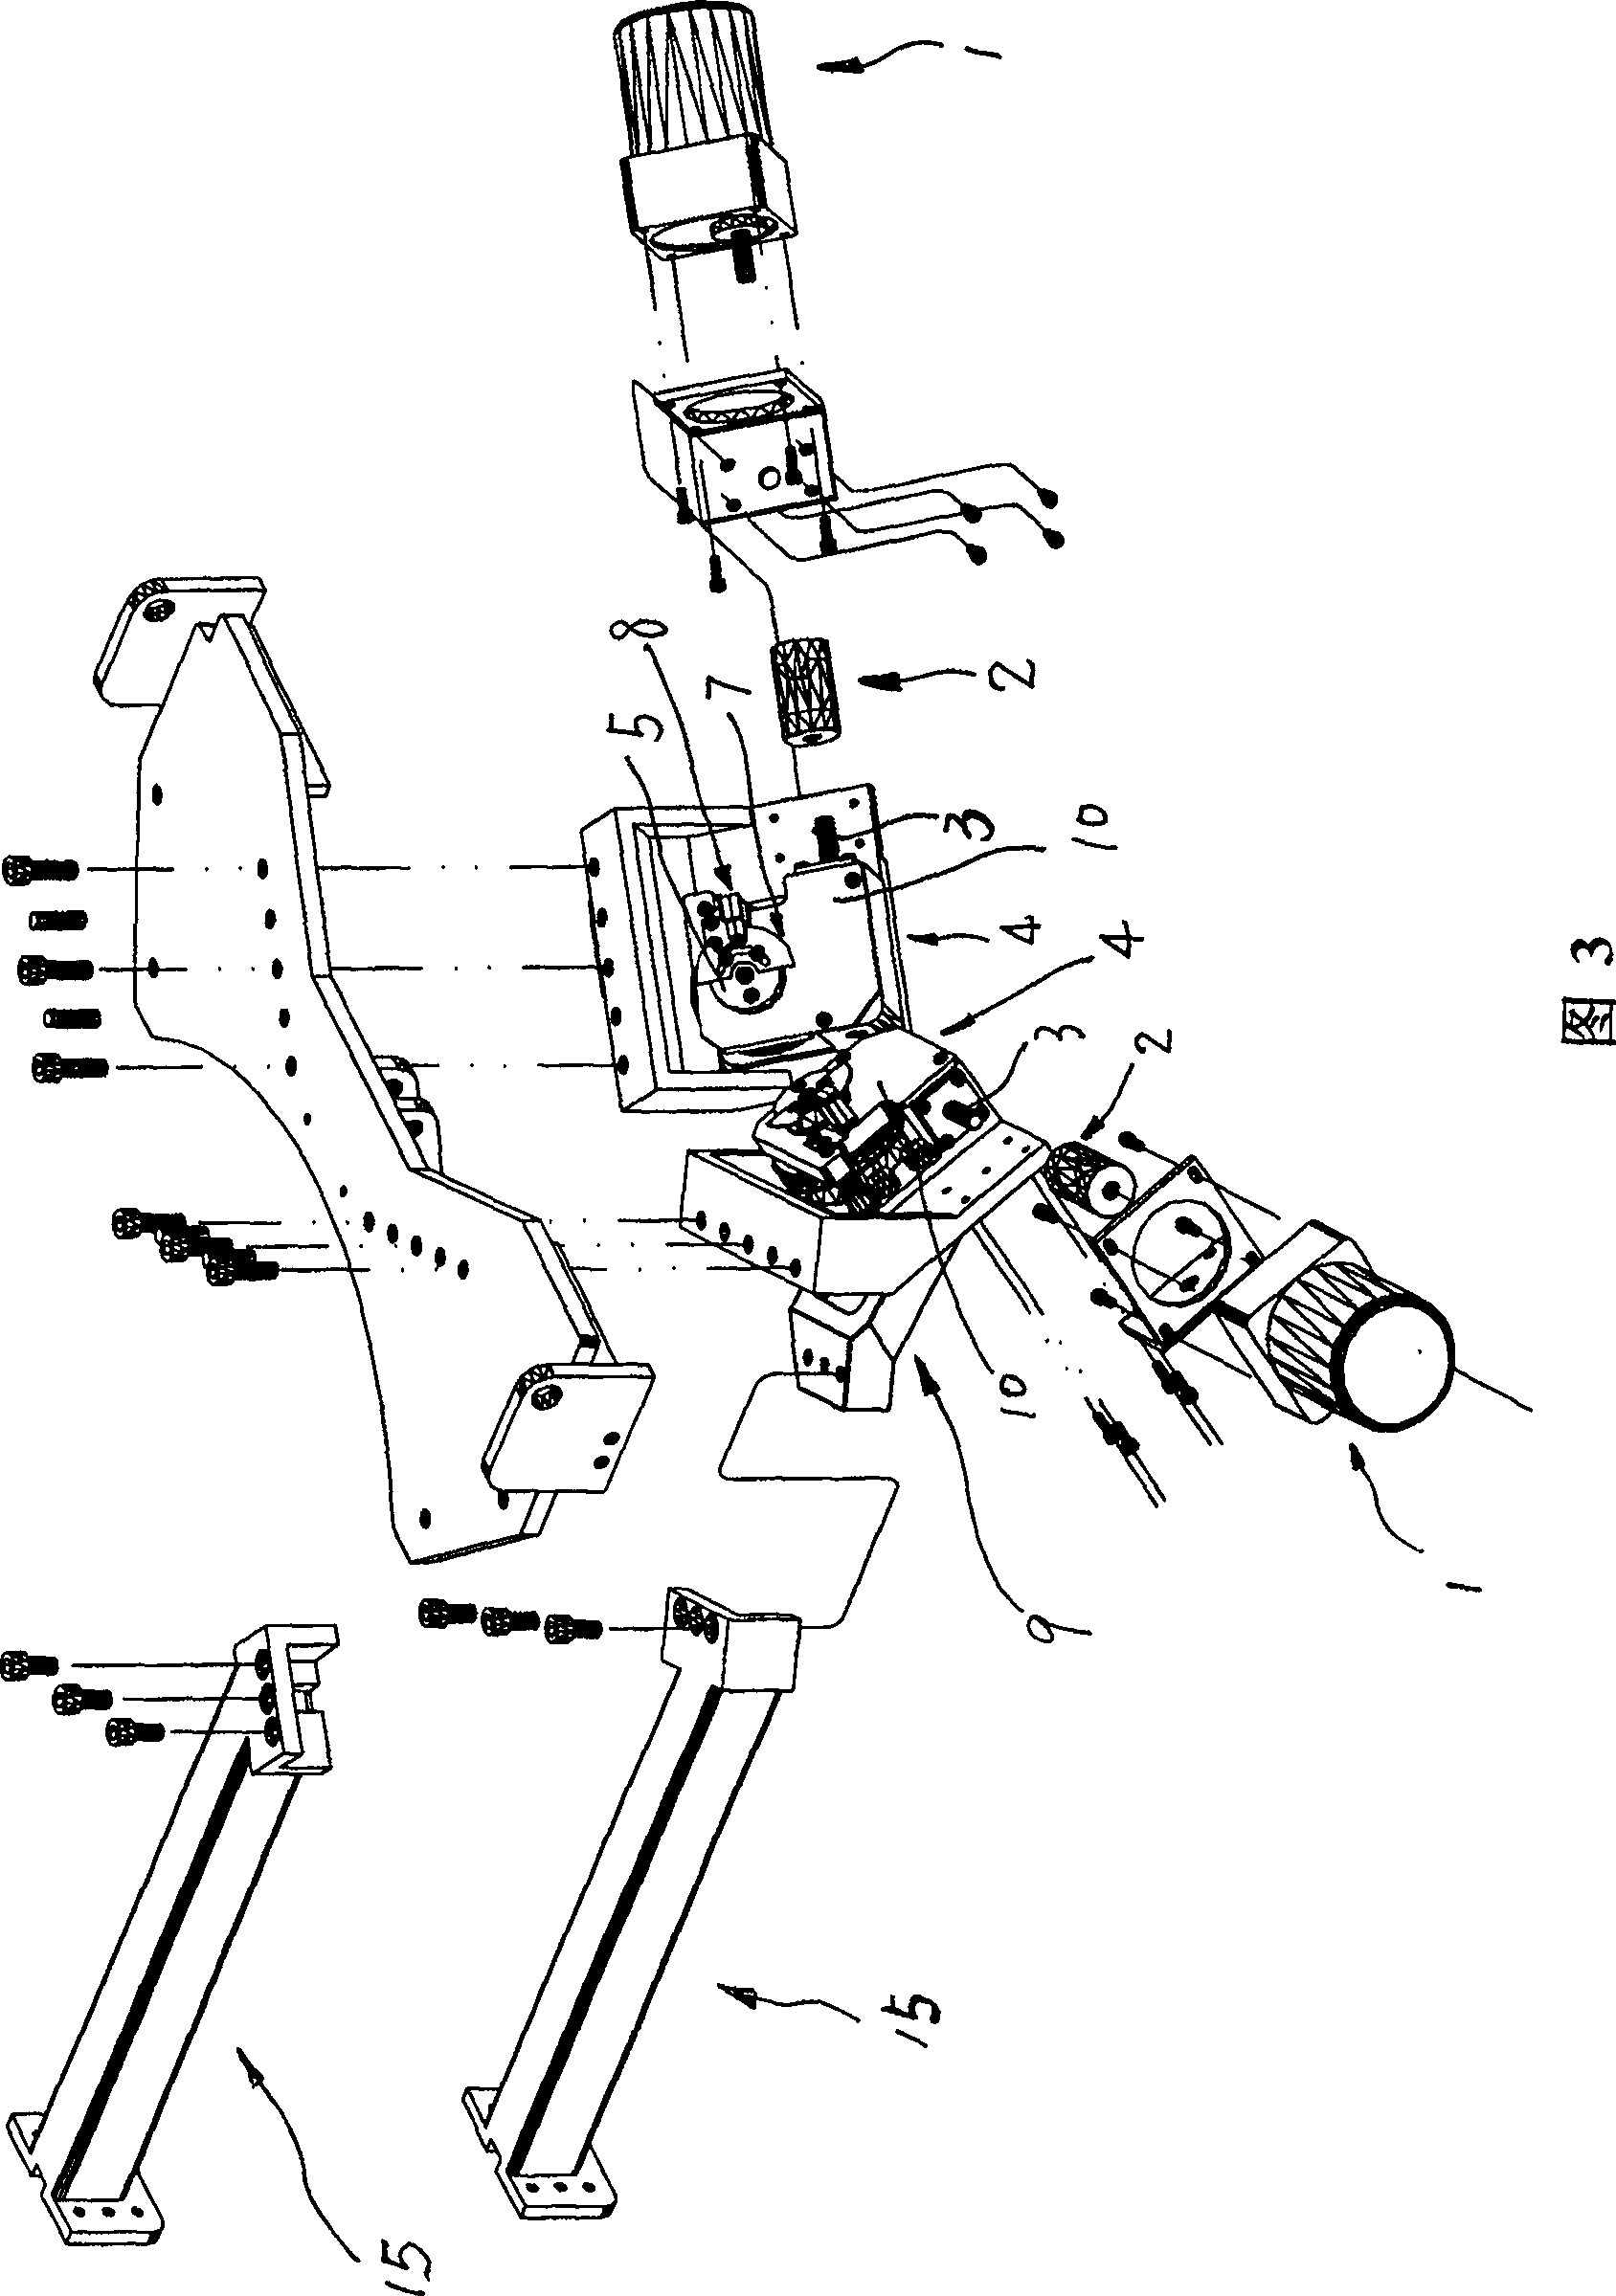 Electric leg-separating mechanism